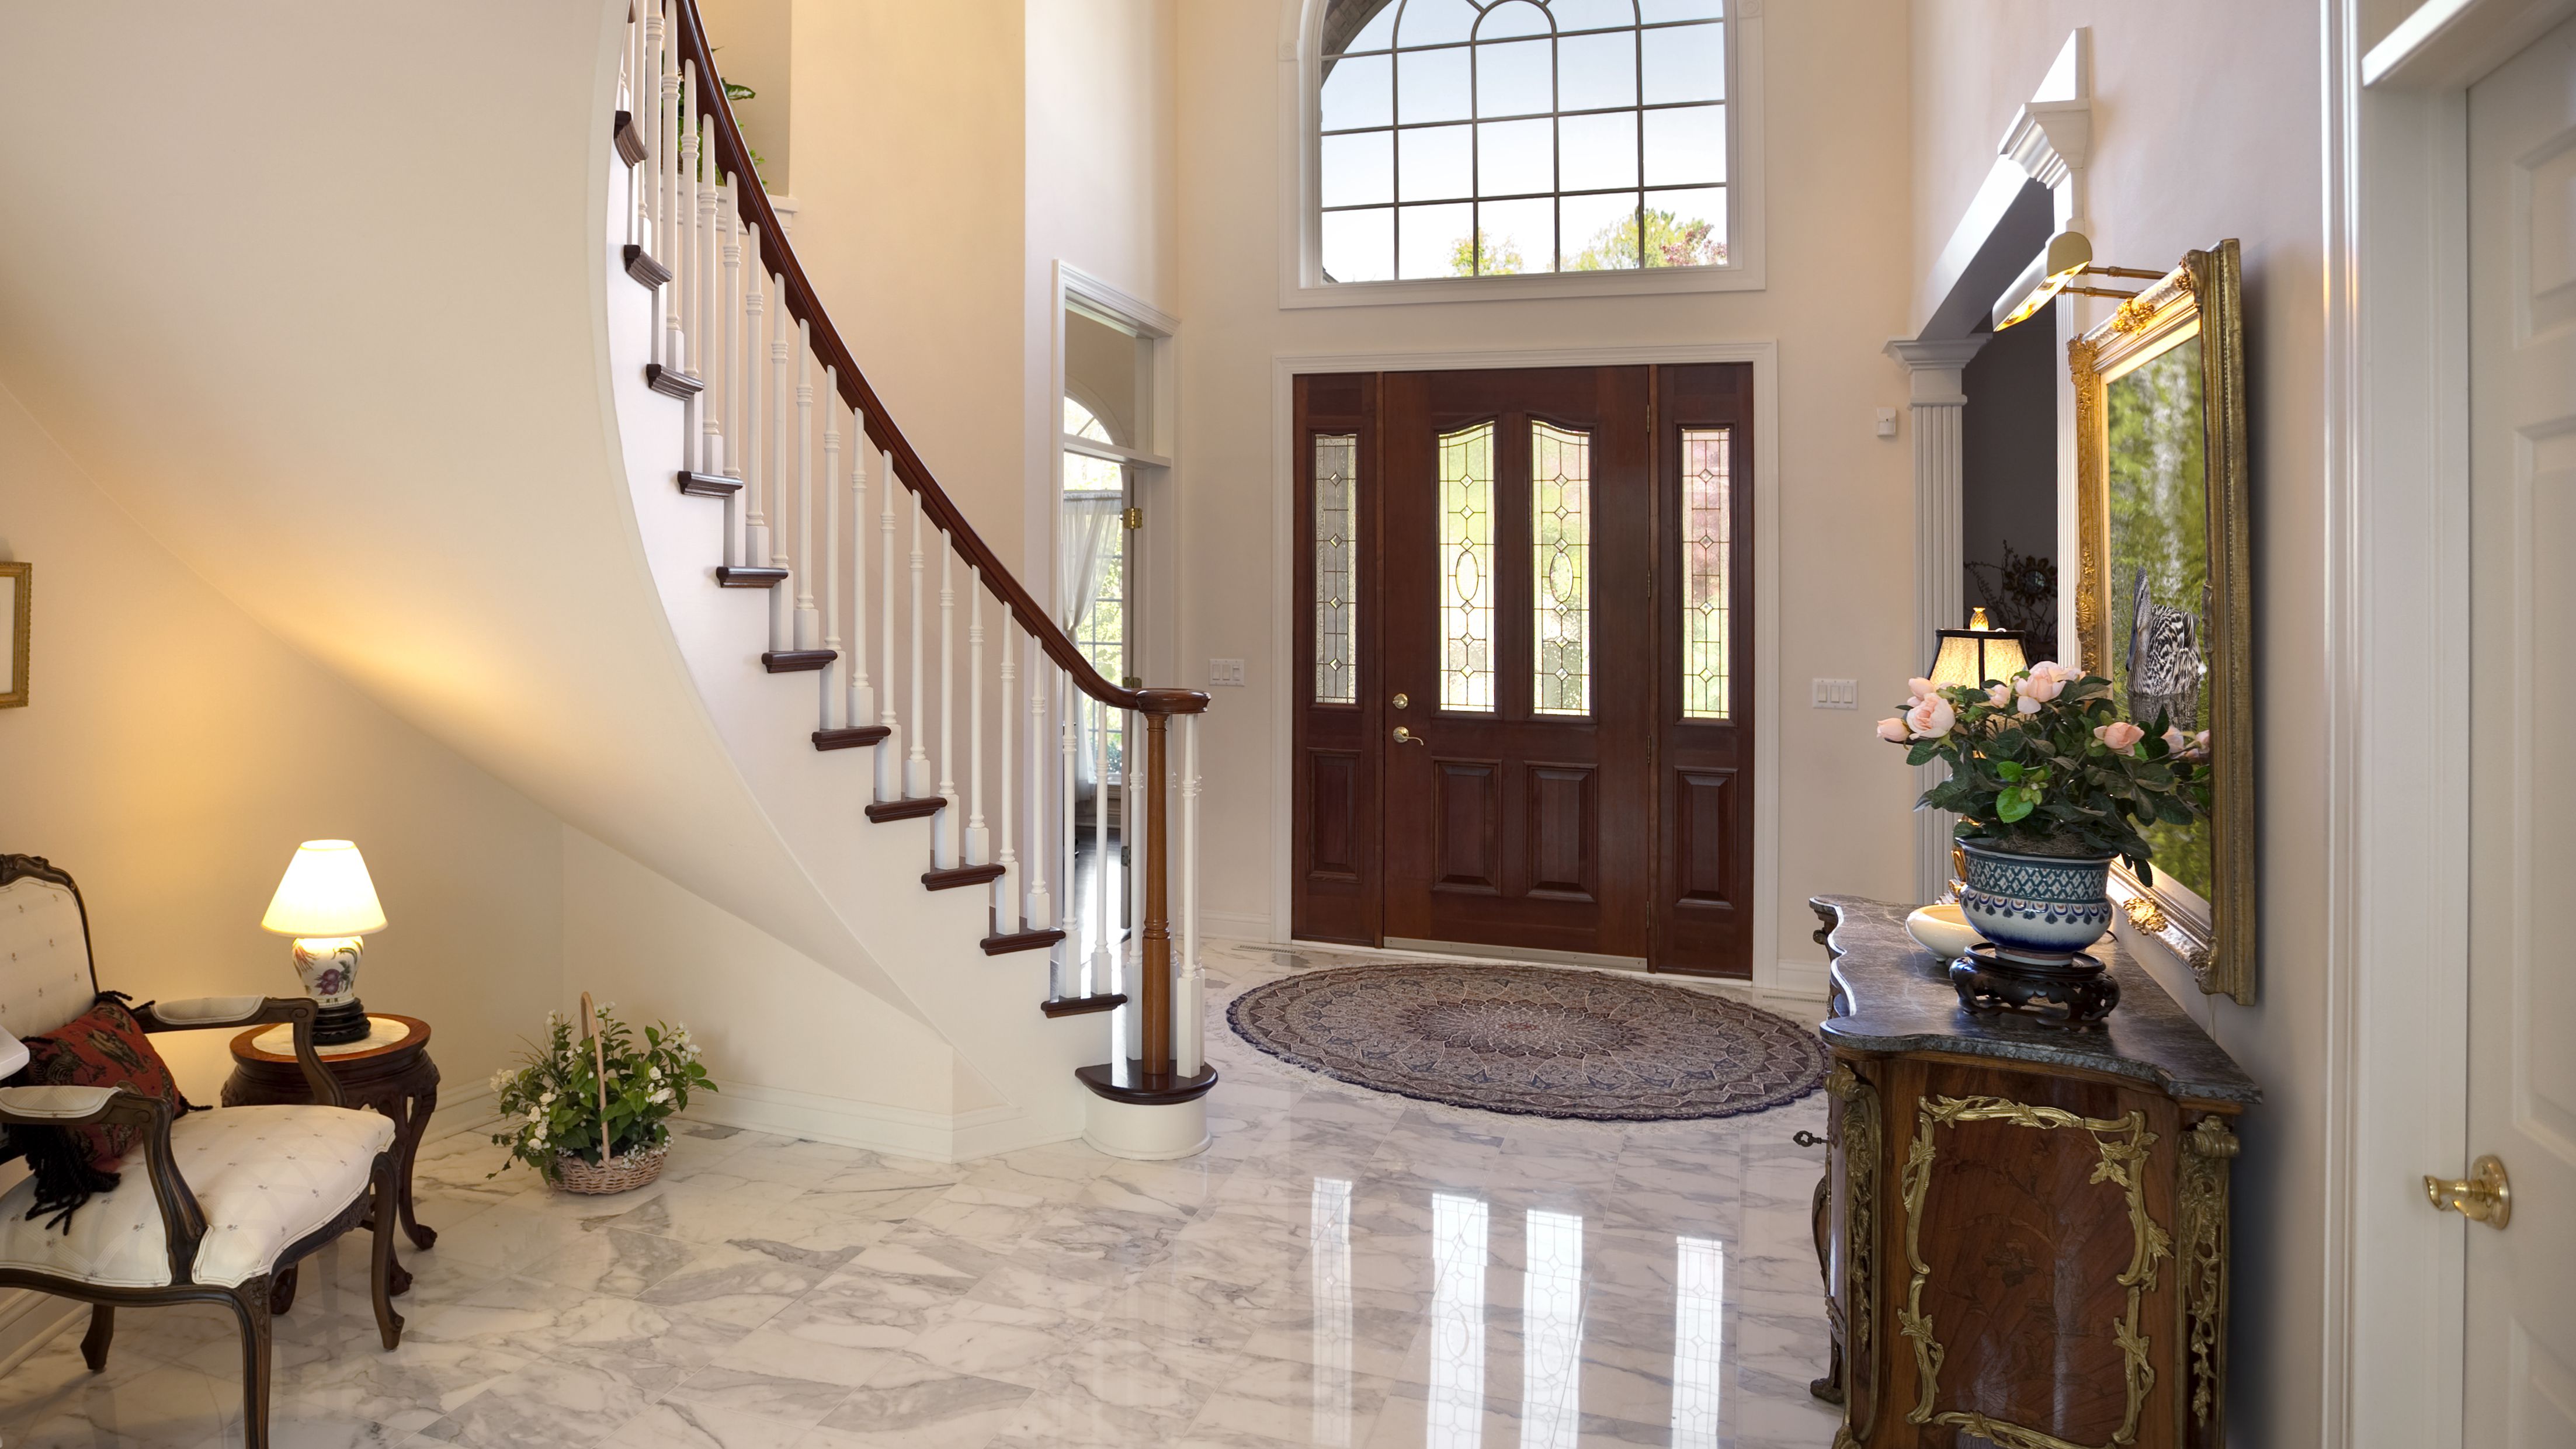 grand-foyer--staircase--chandelier--marble-floor-showcase-home-interior-design-157593982-5c456bbd46e0fb0001aac789